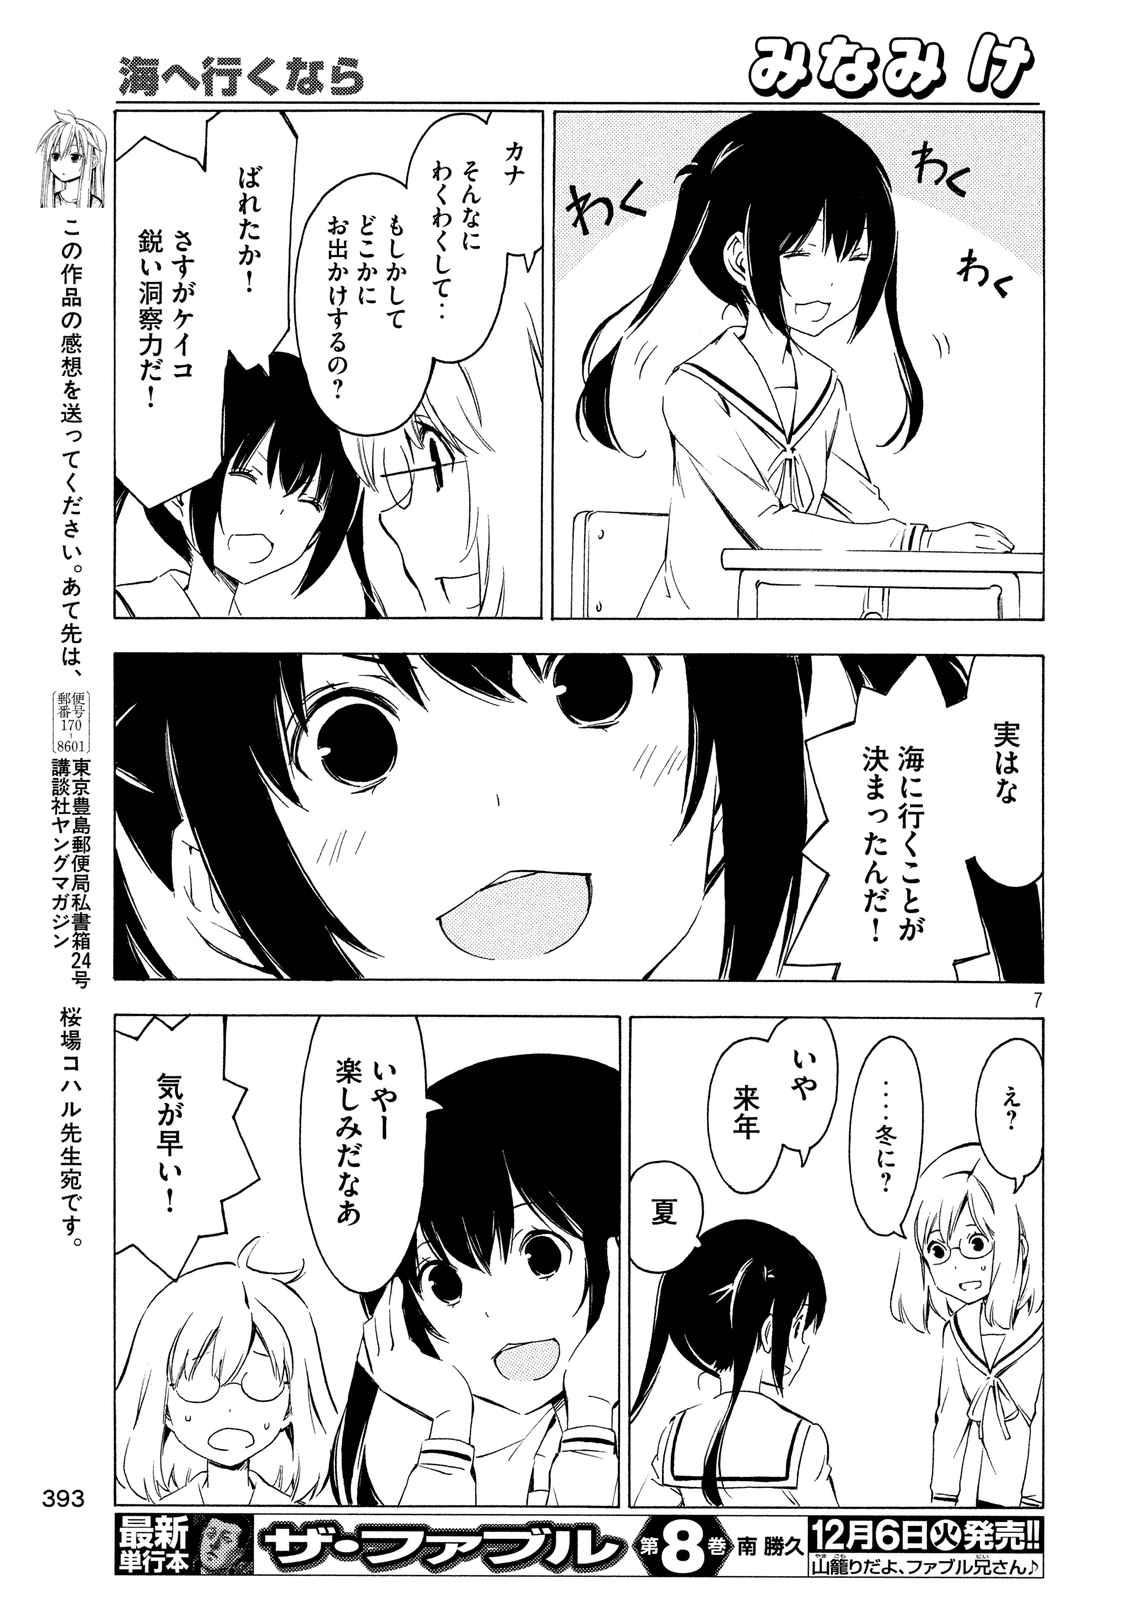 Minami-ke - Chapter 306 - Page 7